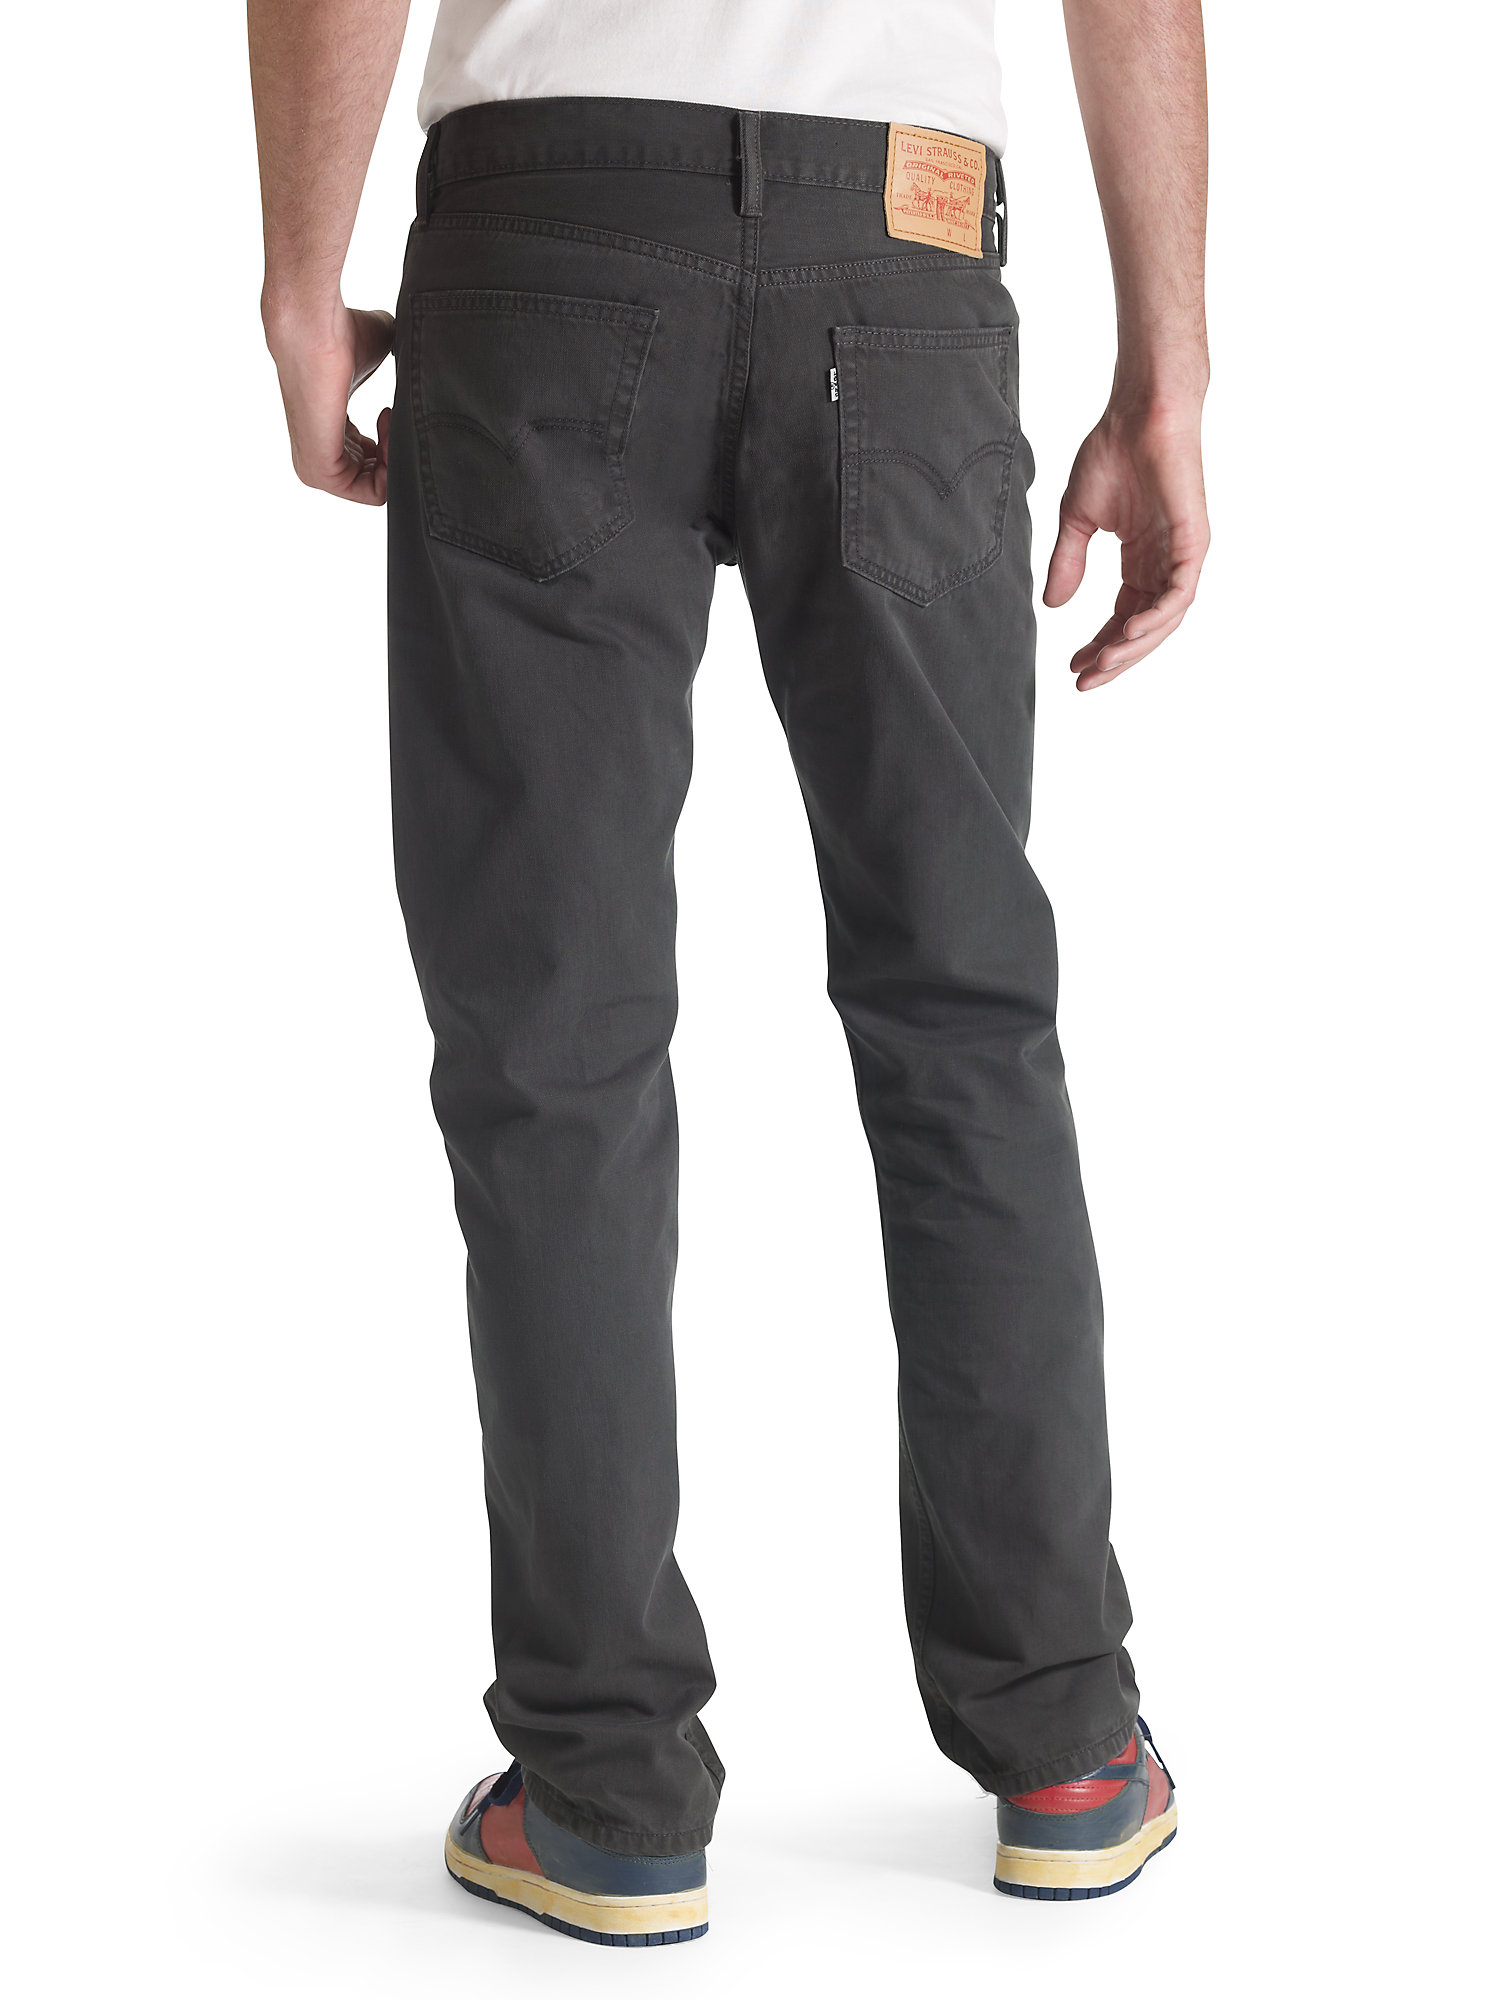 Levis Men's 505 Regular Fit Jeans - image 3 of 3